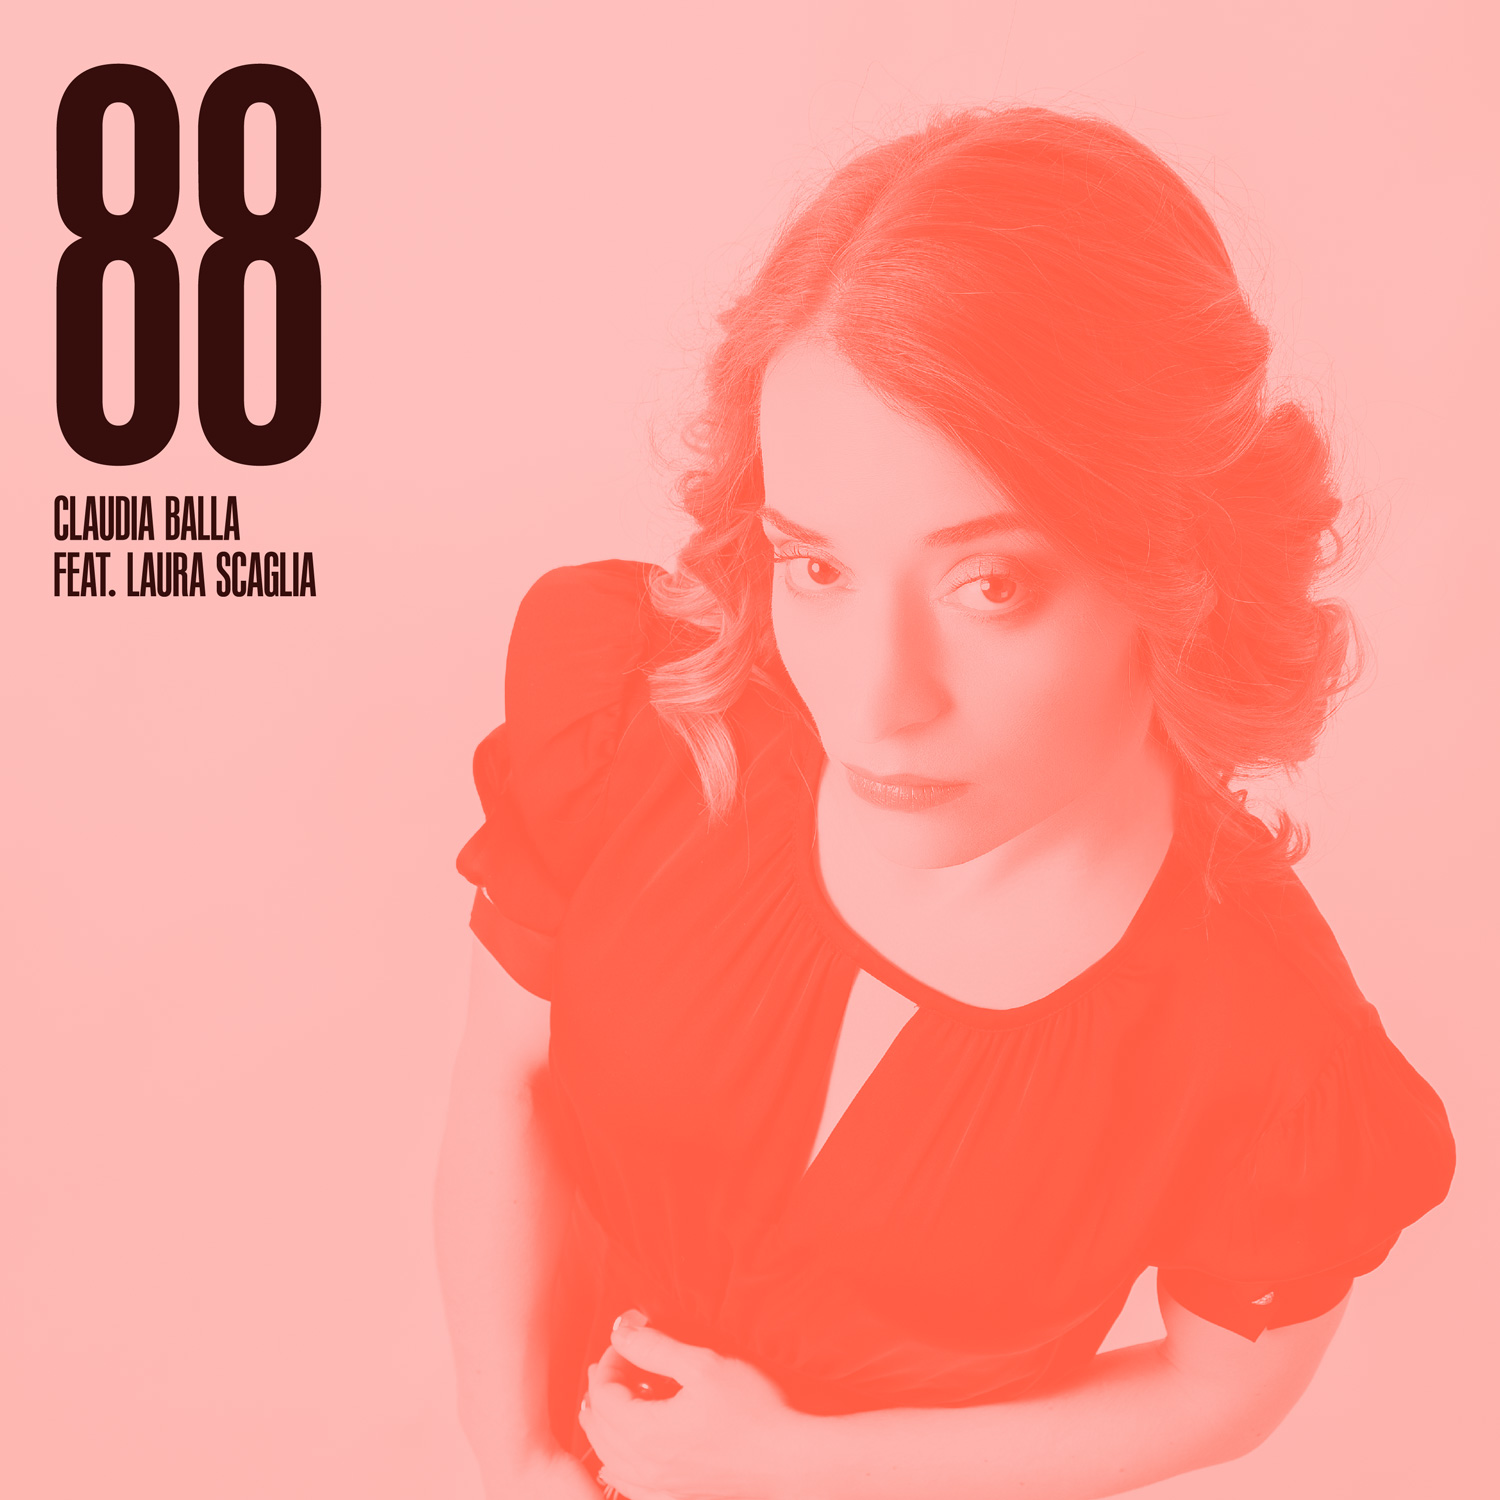 "88" by Claudia Balla